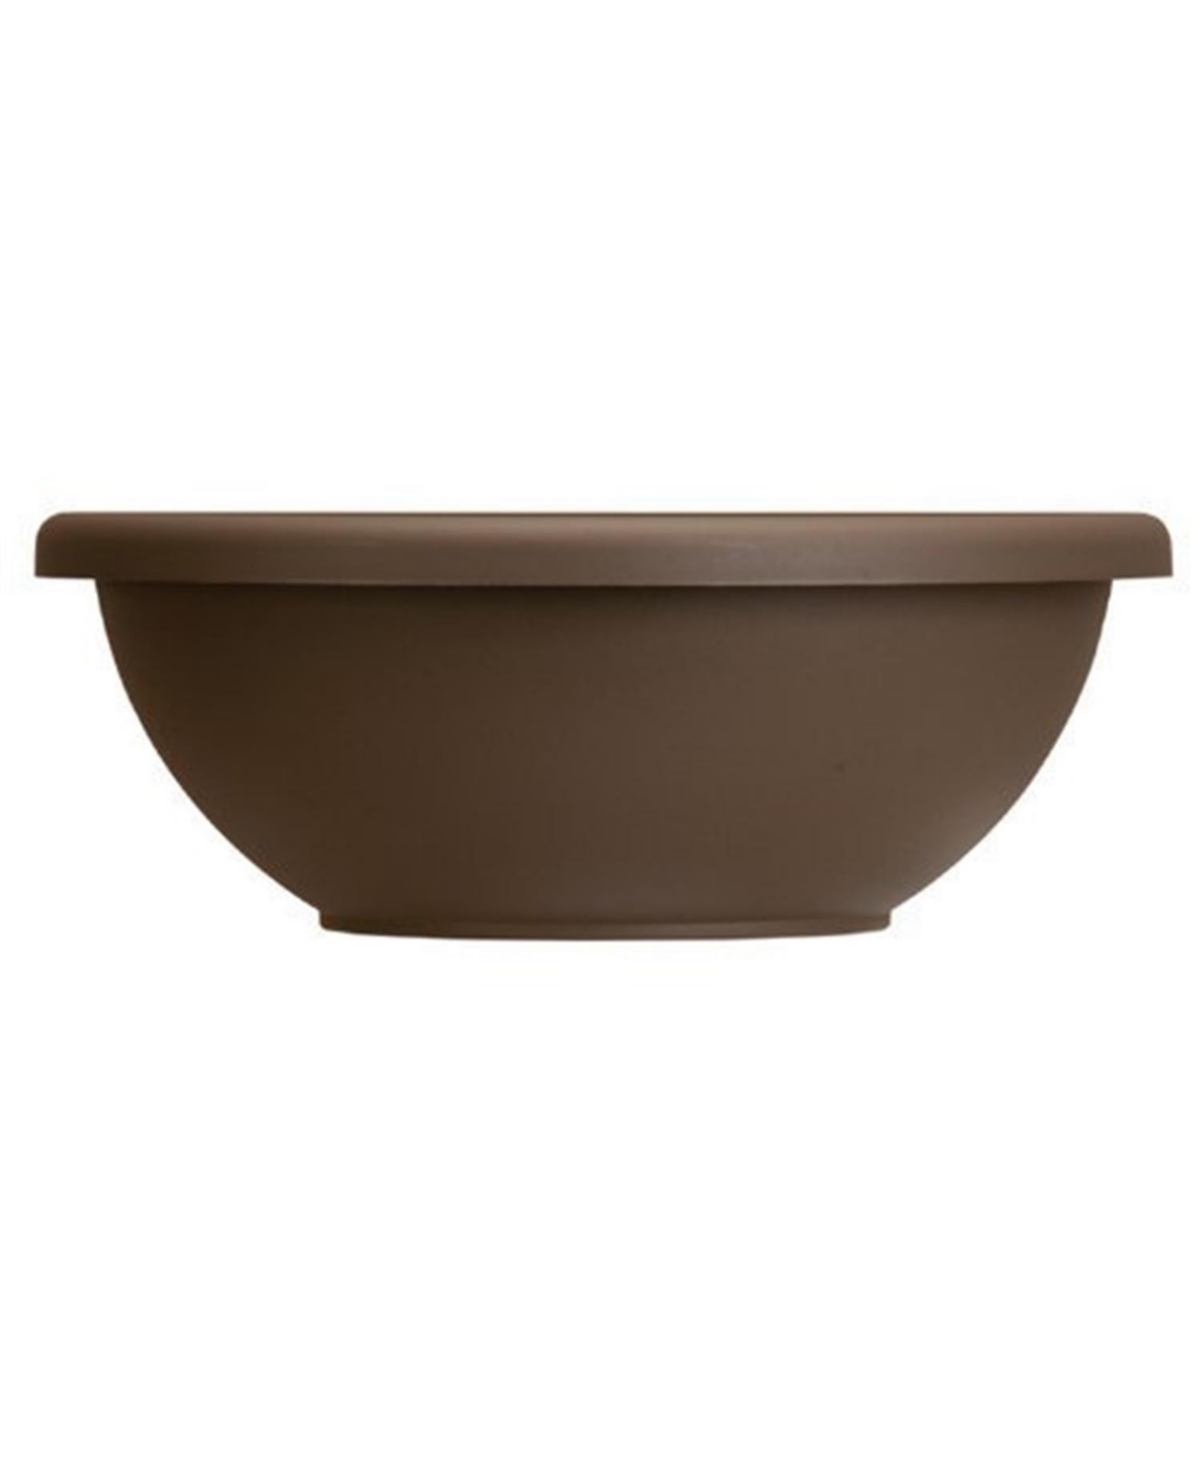 Akro Mills Garden Bowl, Chocolate, 12-Inch GAB12000E21 - Brown